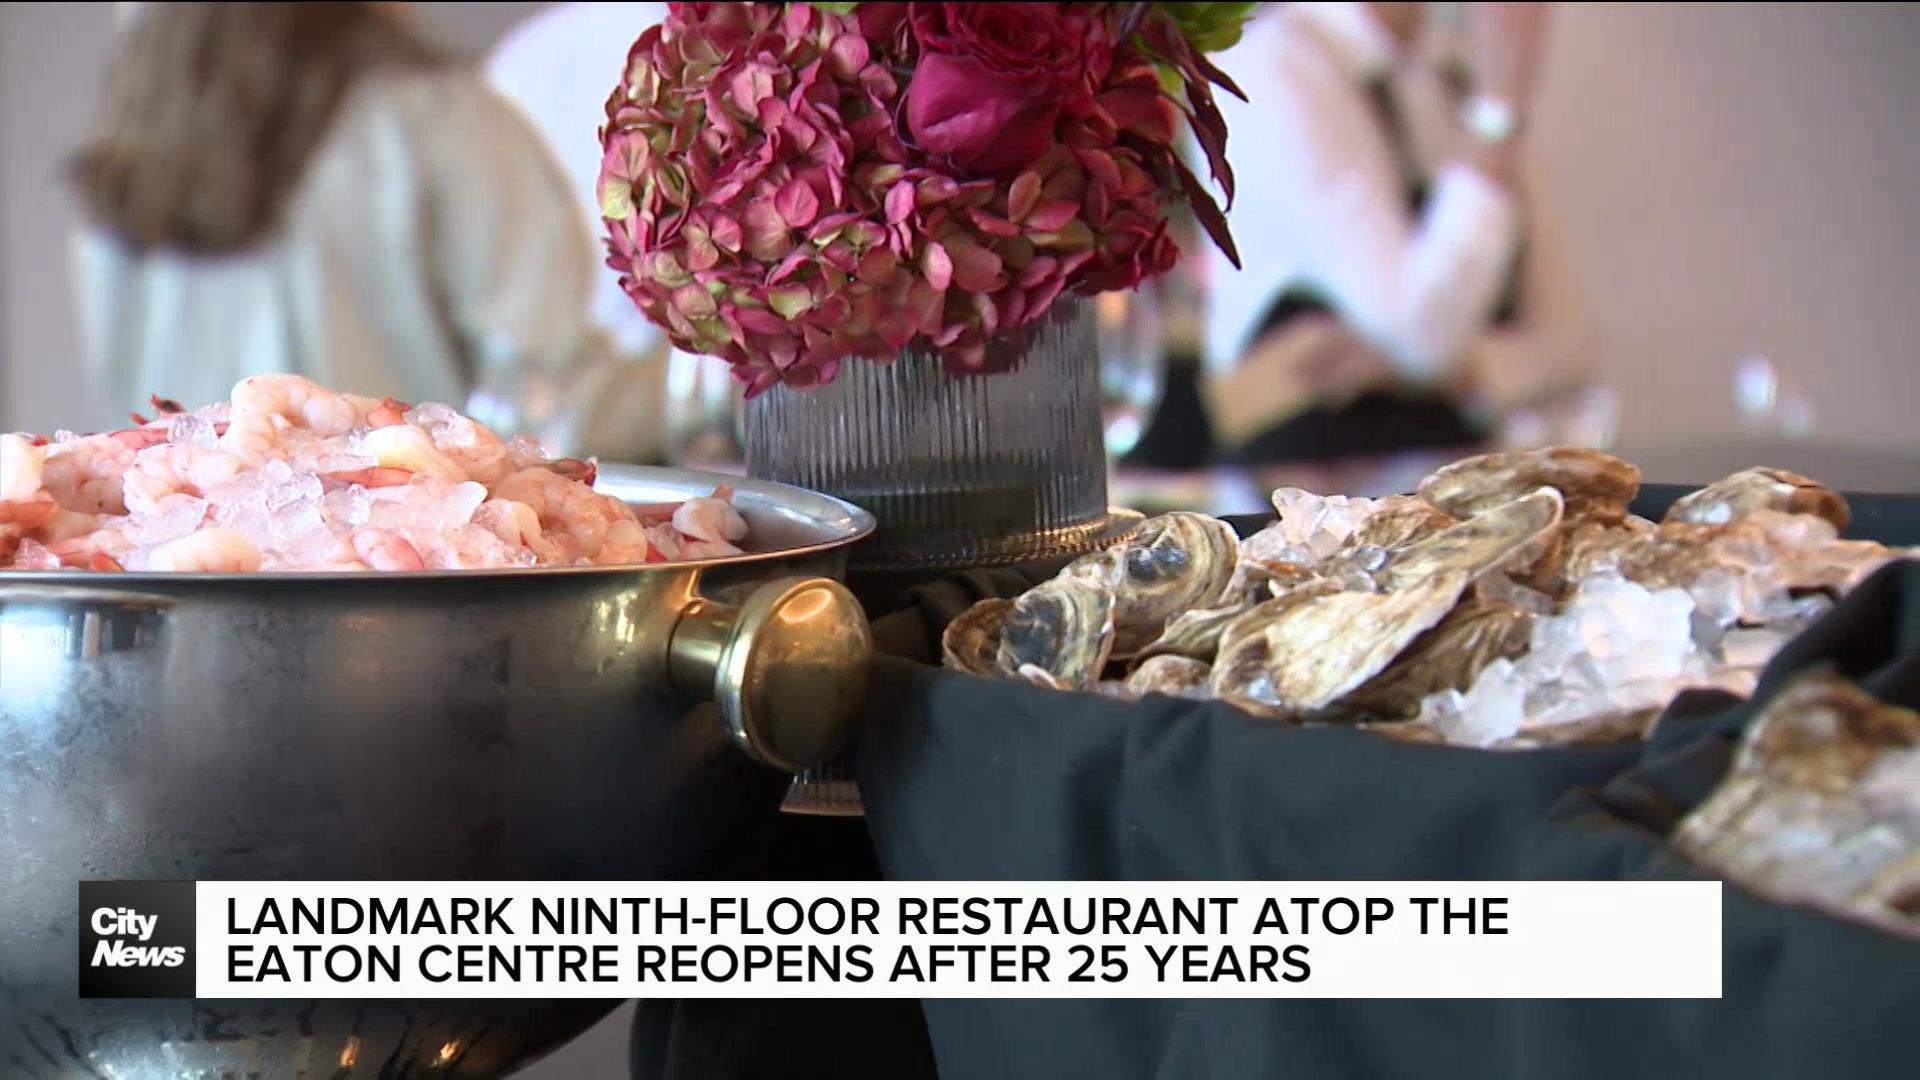 Landmark ninth-floor restaurant atop the Eaton Centre reopens